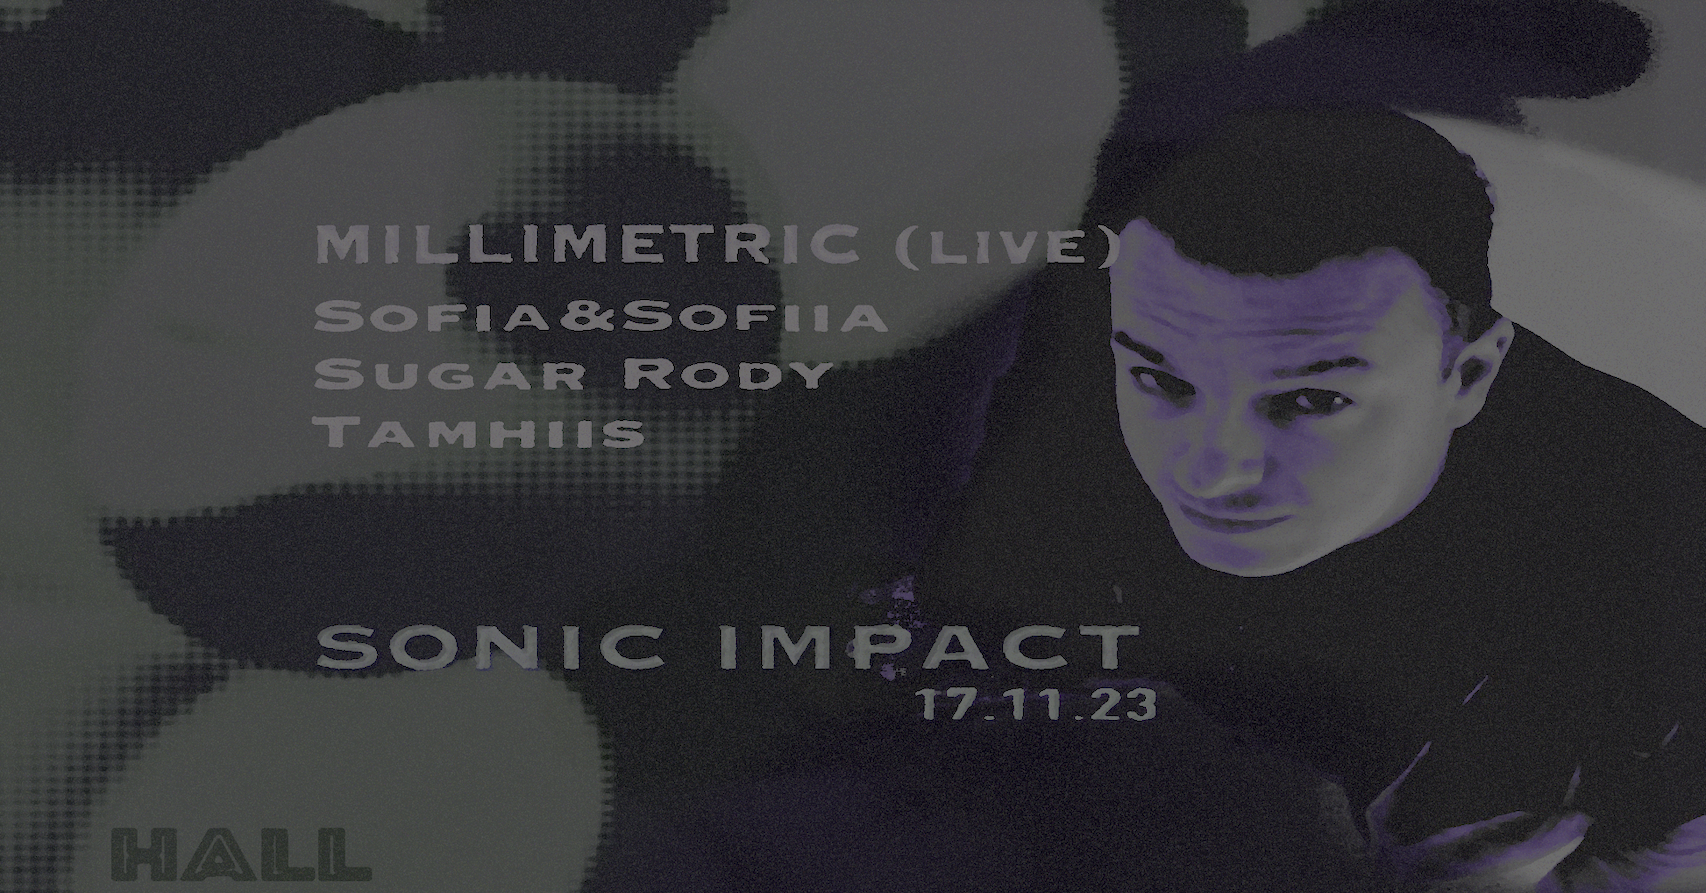 SONIC IMPACT: Millimetric FX (live) - Página frontal